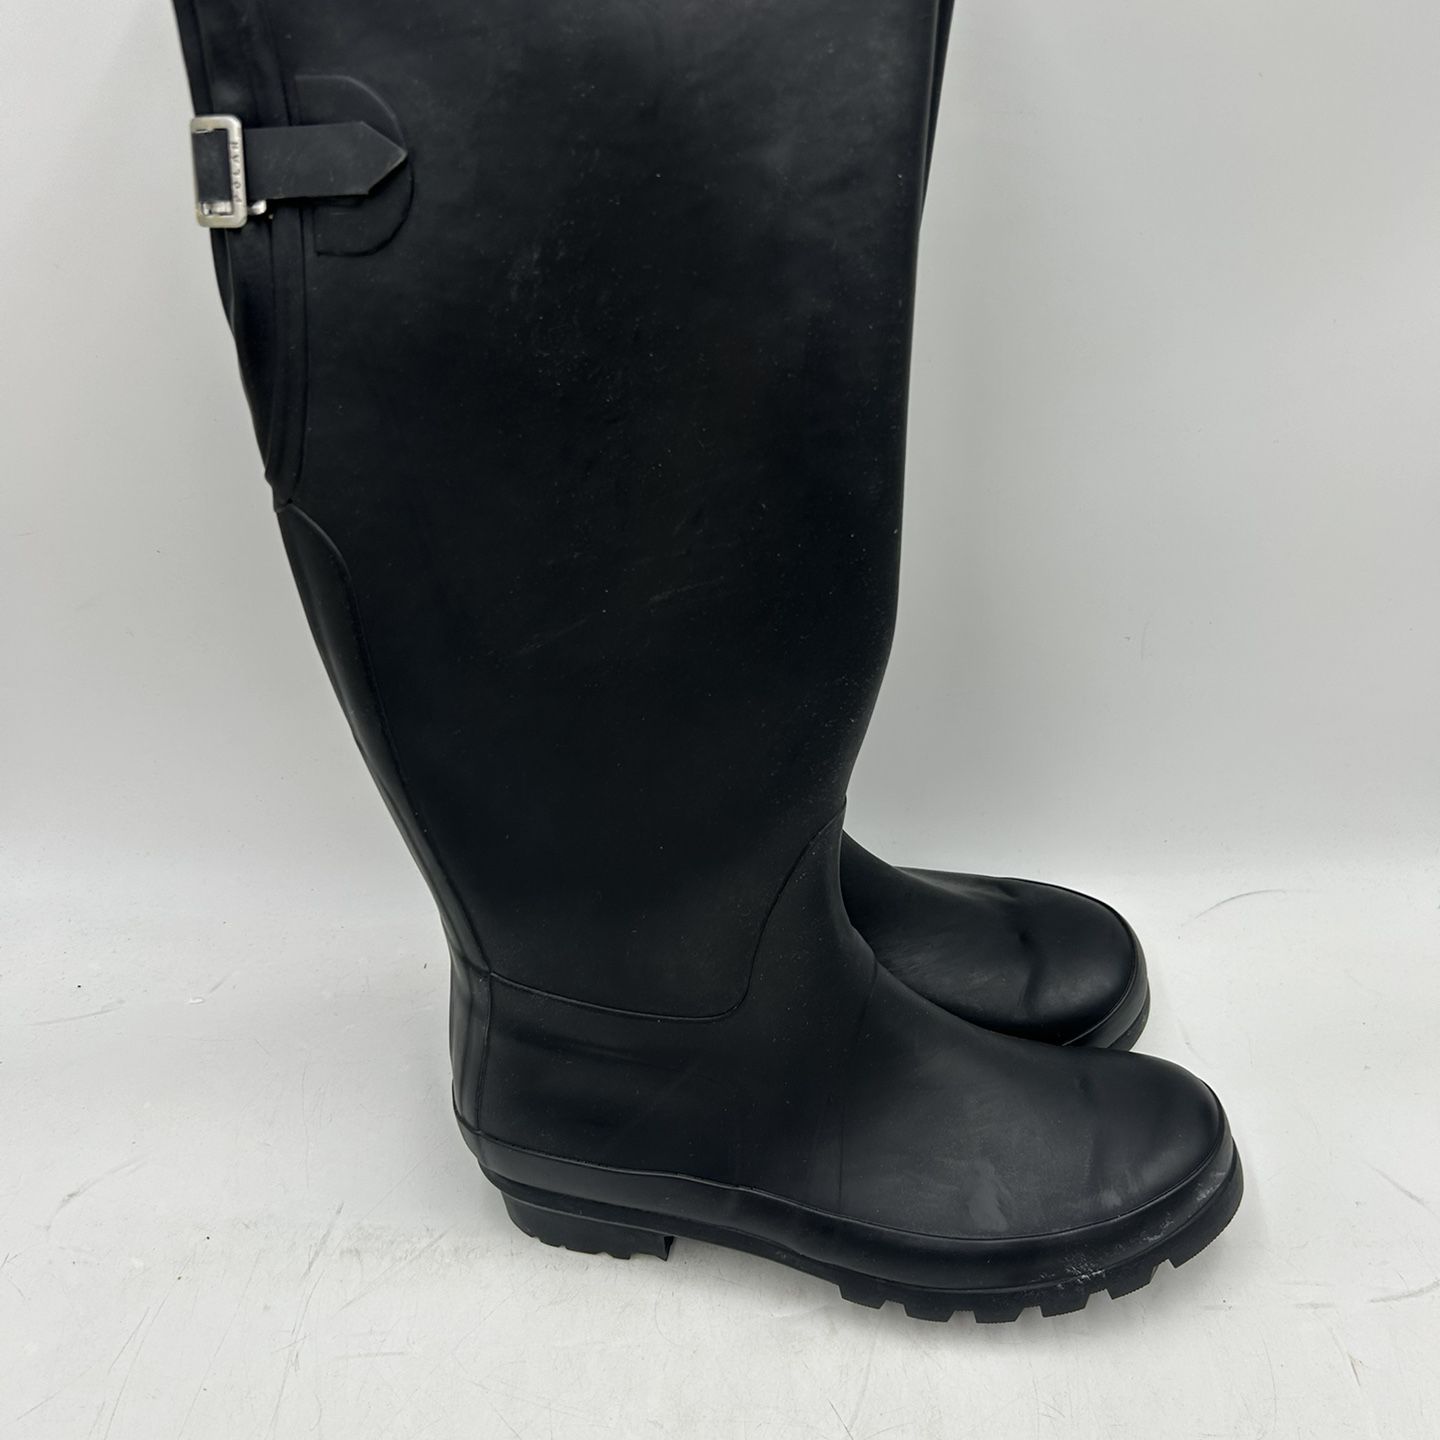 Rain Boots Size 9w Polar Snow   Size 9 Women